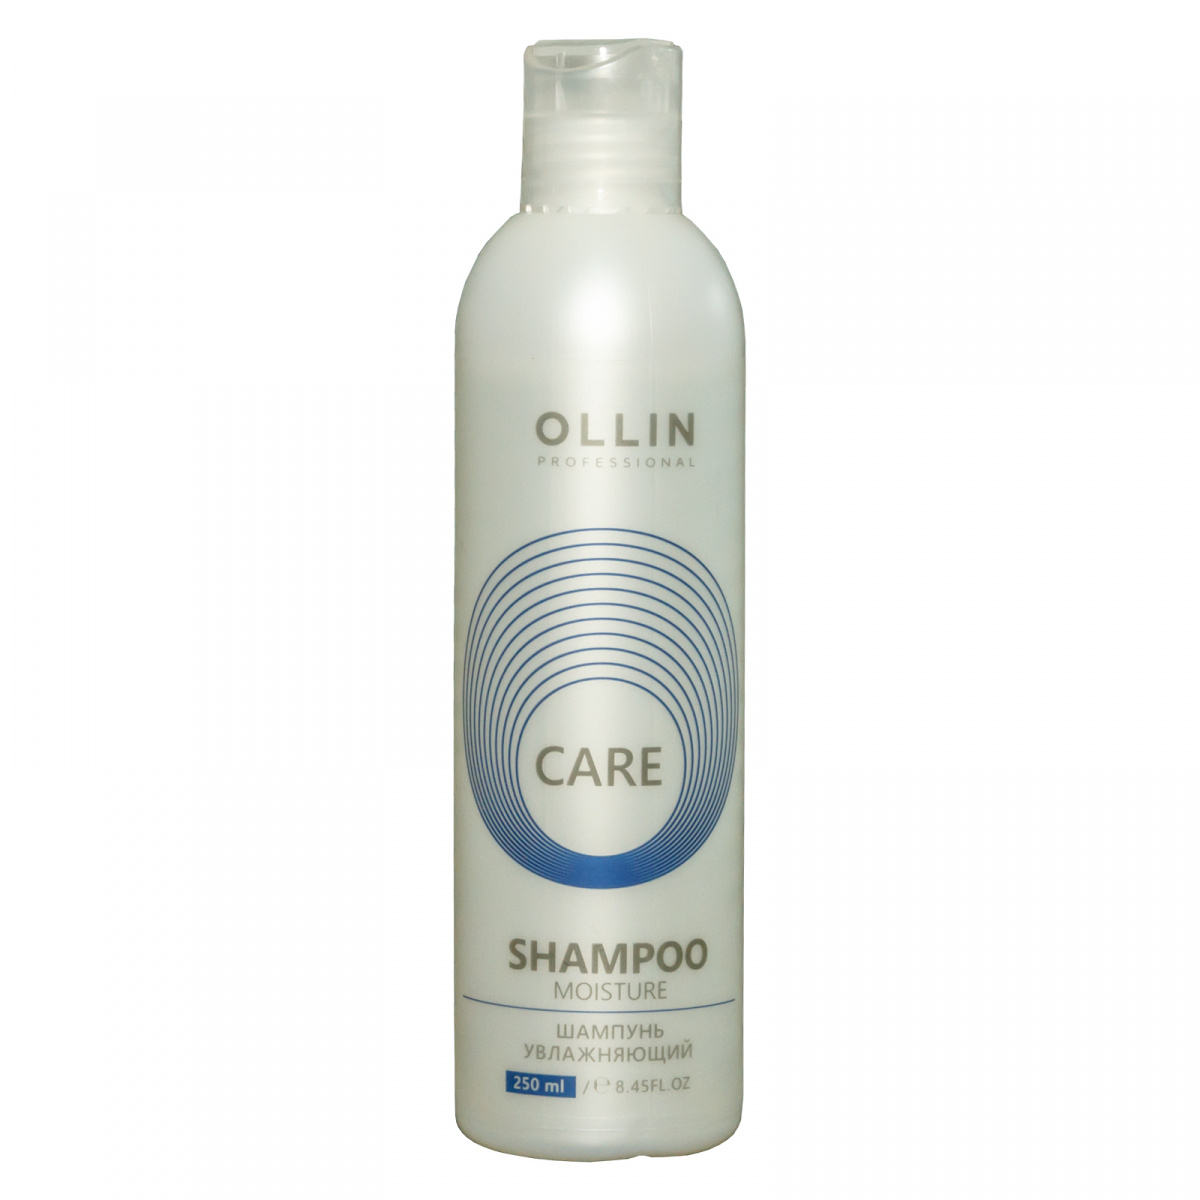 Ollin Professional Care Moisture Shampoo - Шампунь увлажняющий 250 мл Ollin Professional (Россия) купить по цене 410 руб.